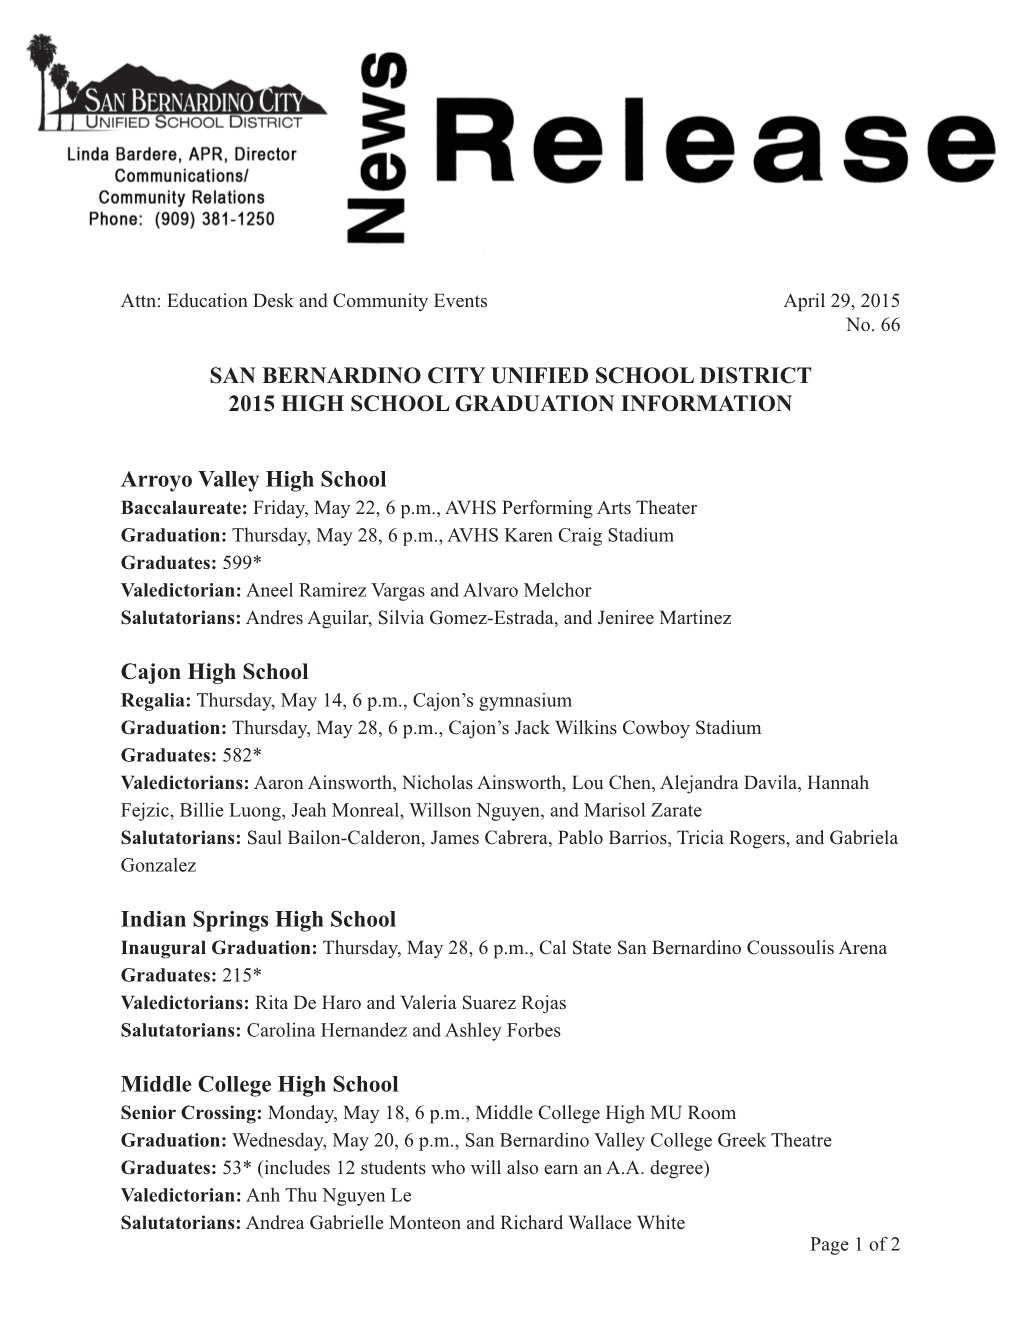 San Bernardino City Unified School District 2015 High School Graduation Information